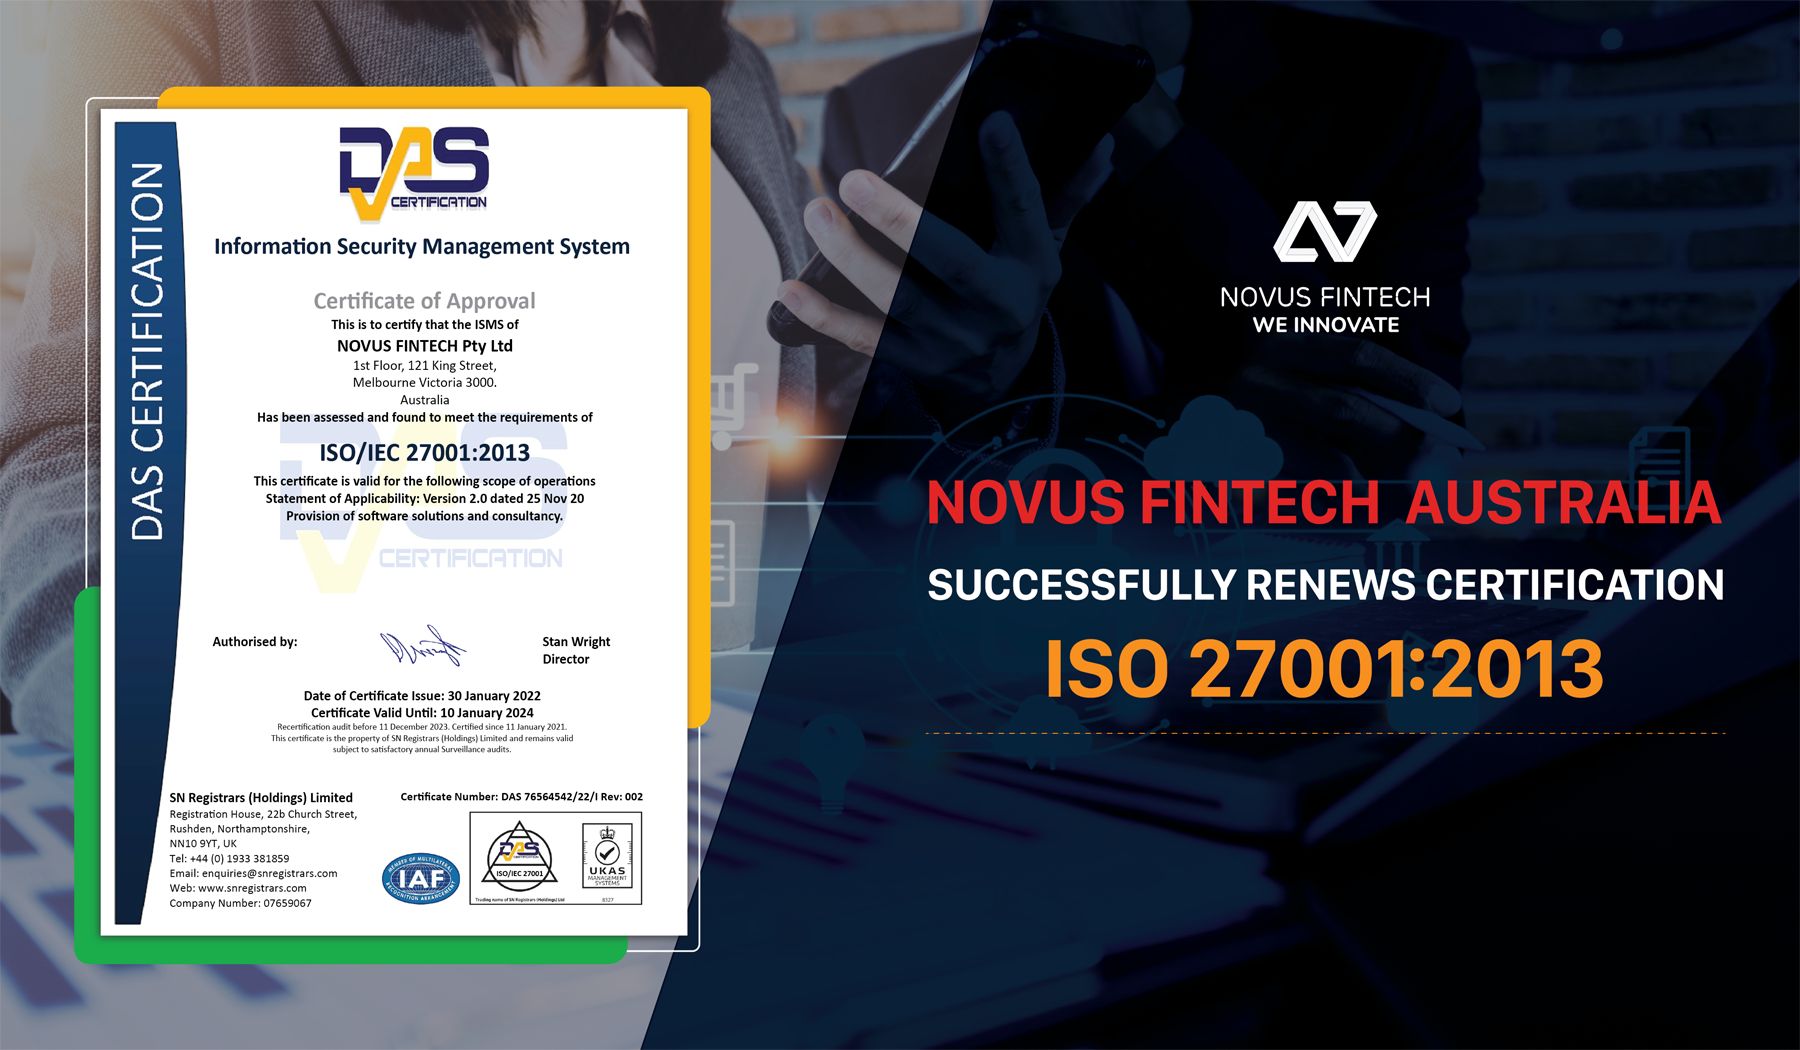 Novus Fintech Australia Successfully Renews Certification ISO 27001:2013